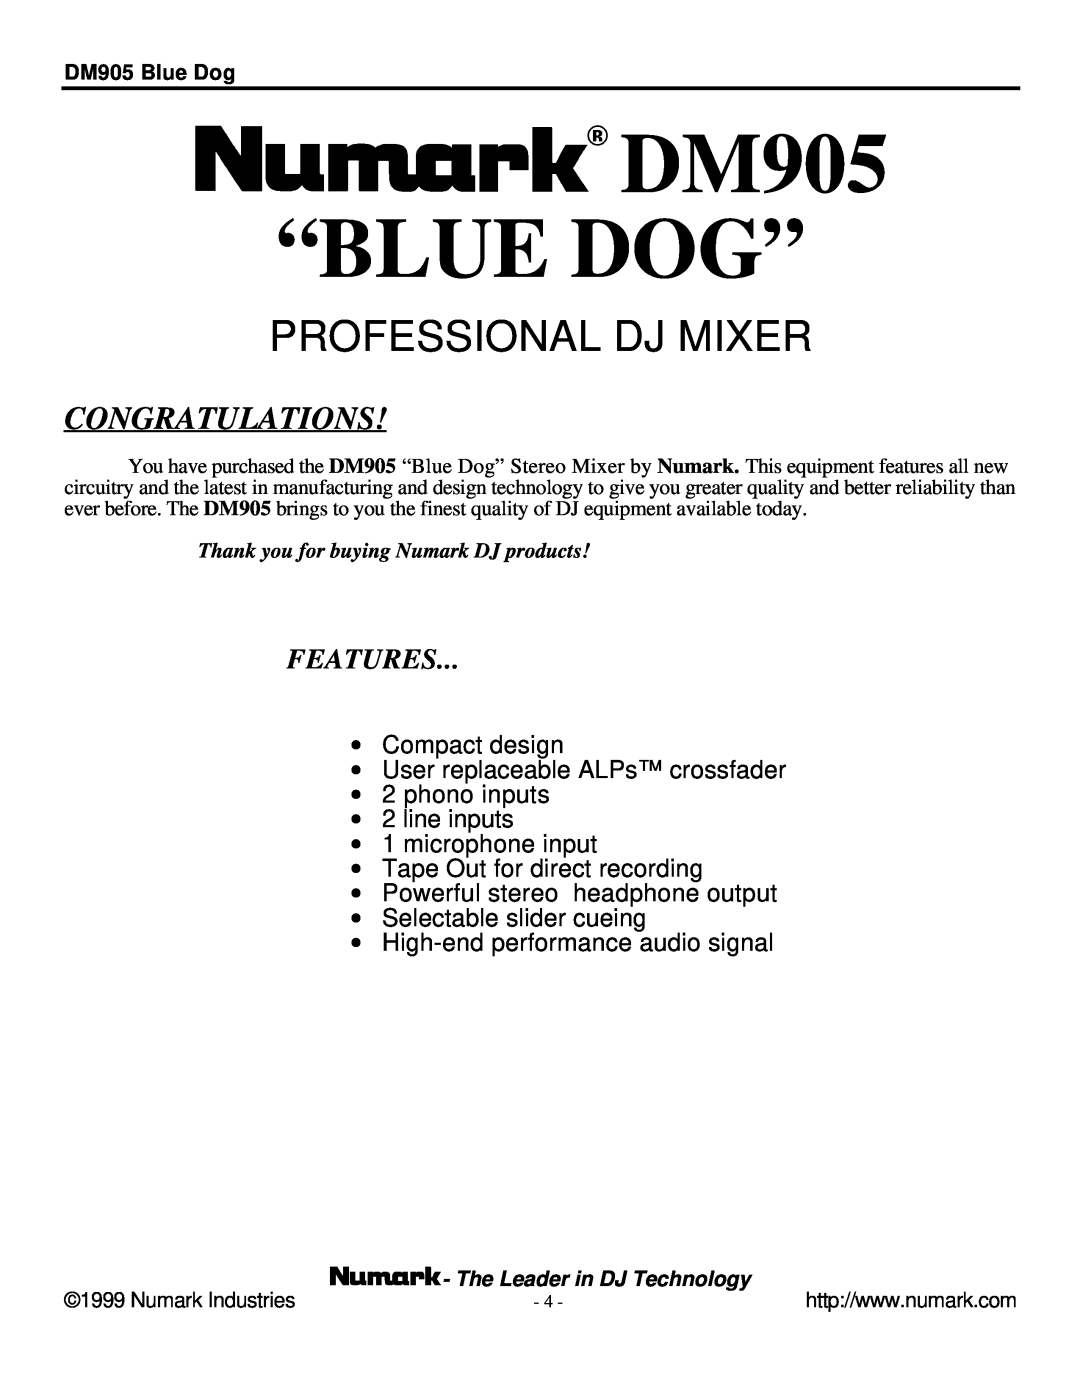 Numark Industries user manual Congratulations, Features, DM905 “BLUE DOG”, Professional Dj Mixer 